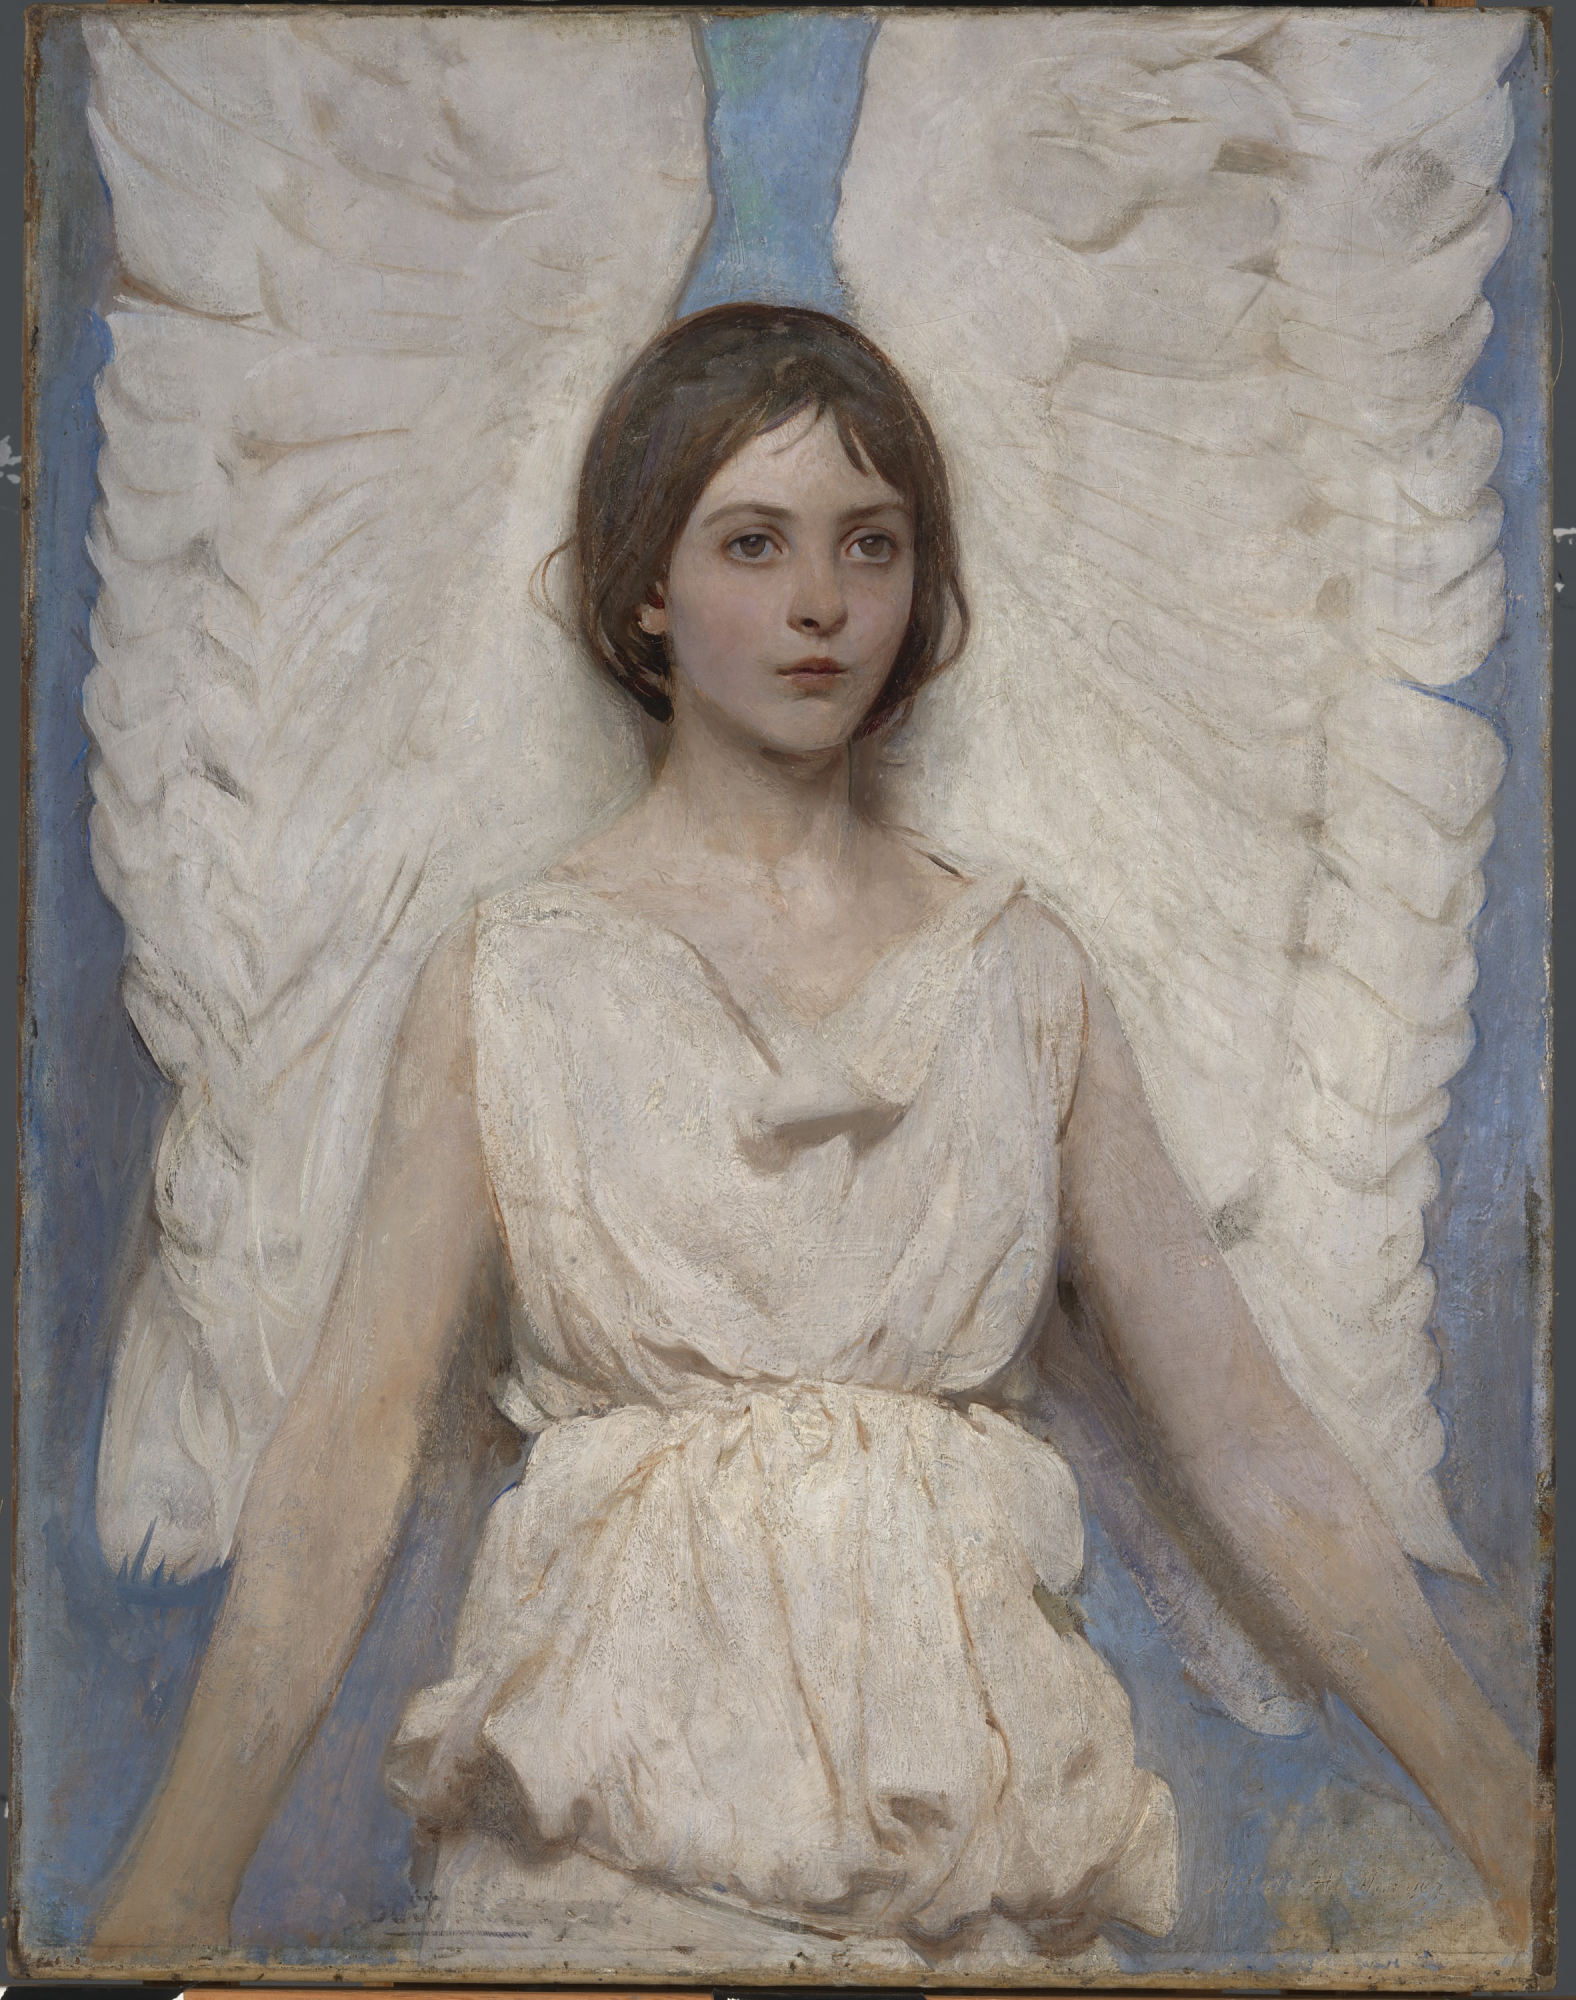 Ангел by Эббот Хэндерсон Тайер - 1887 - 92.0 x 71.5 см 